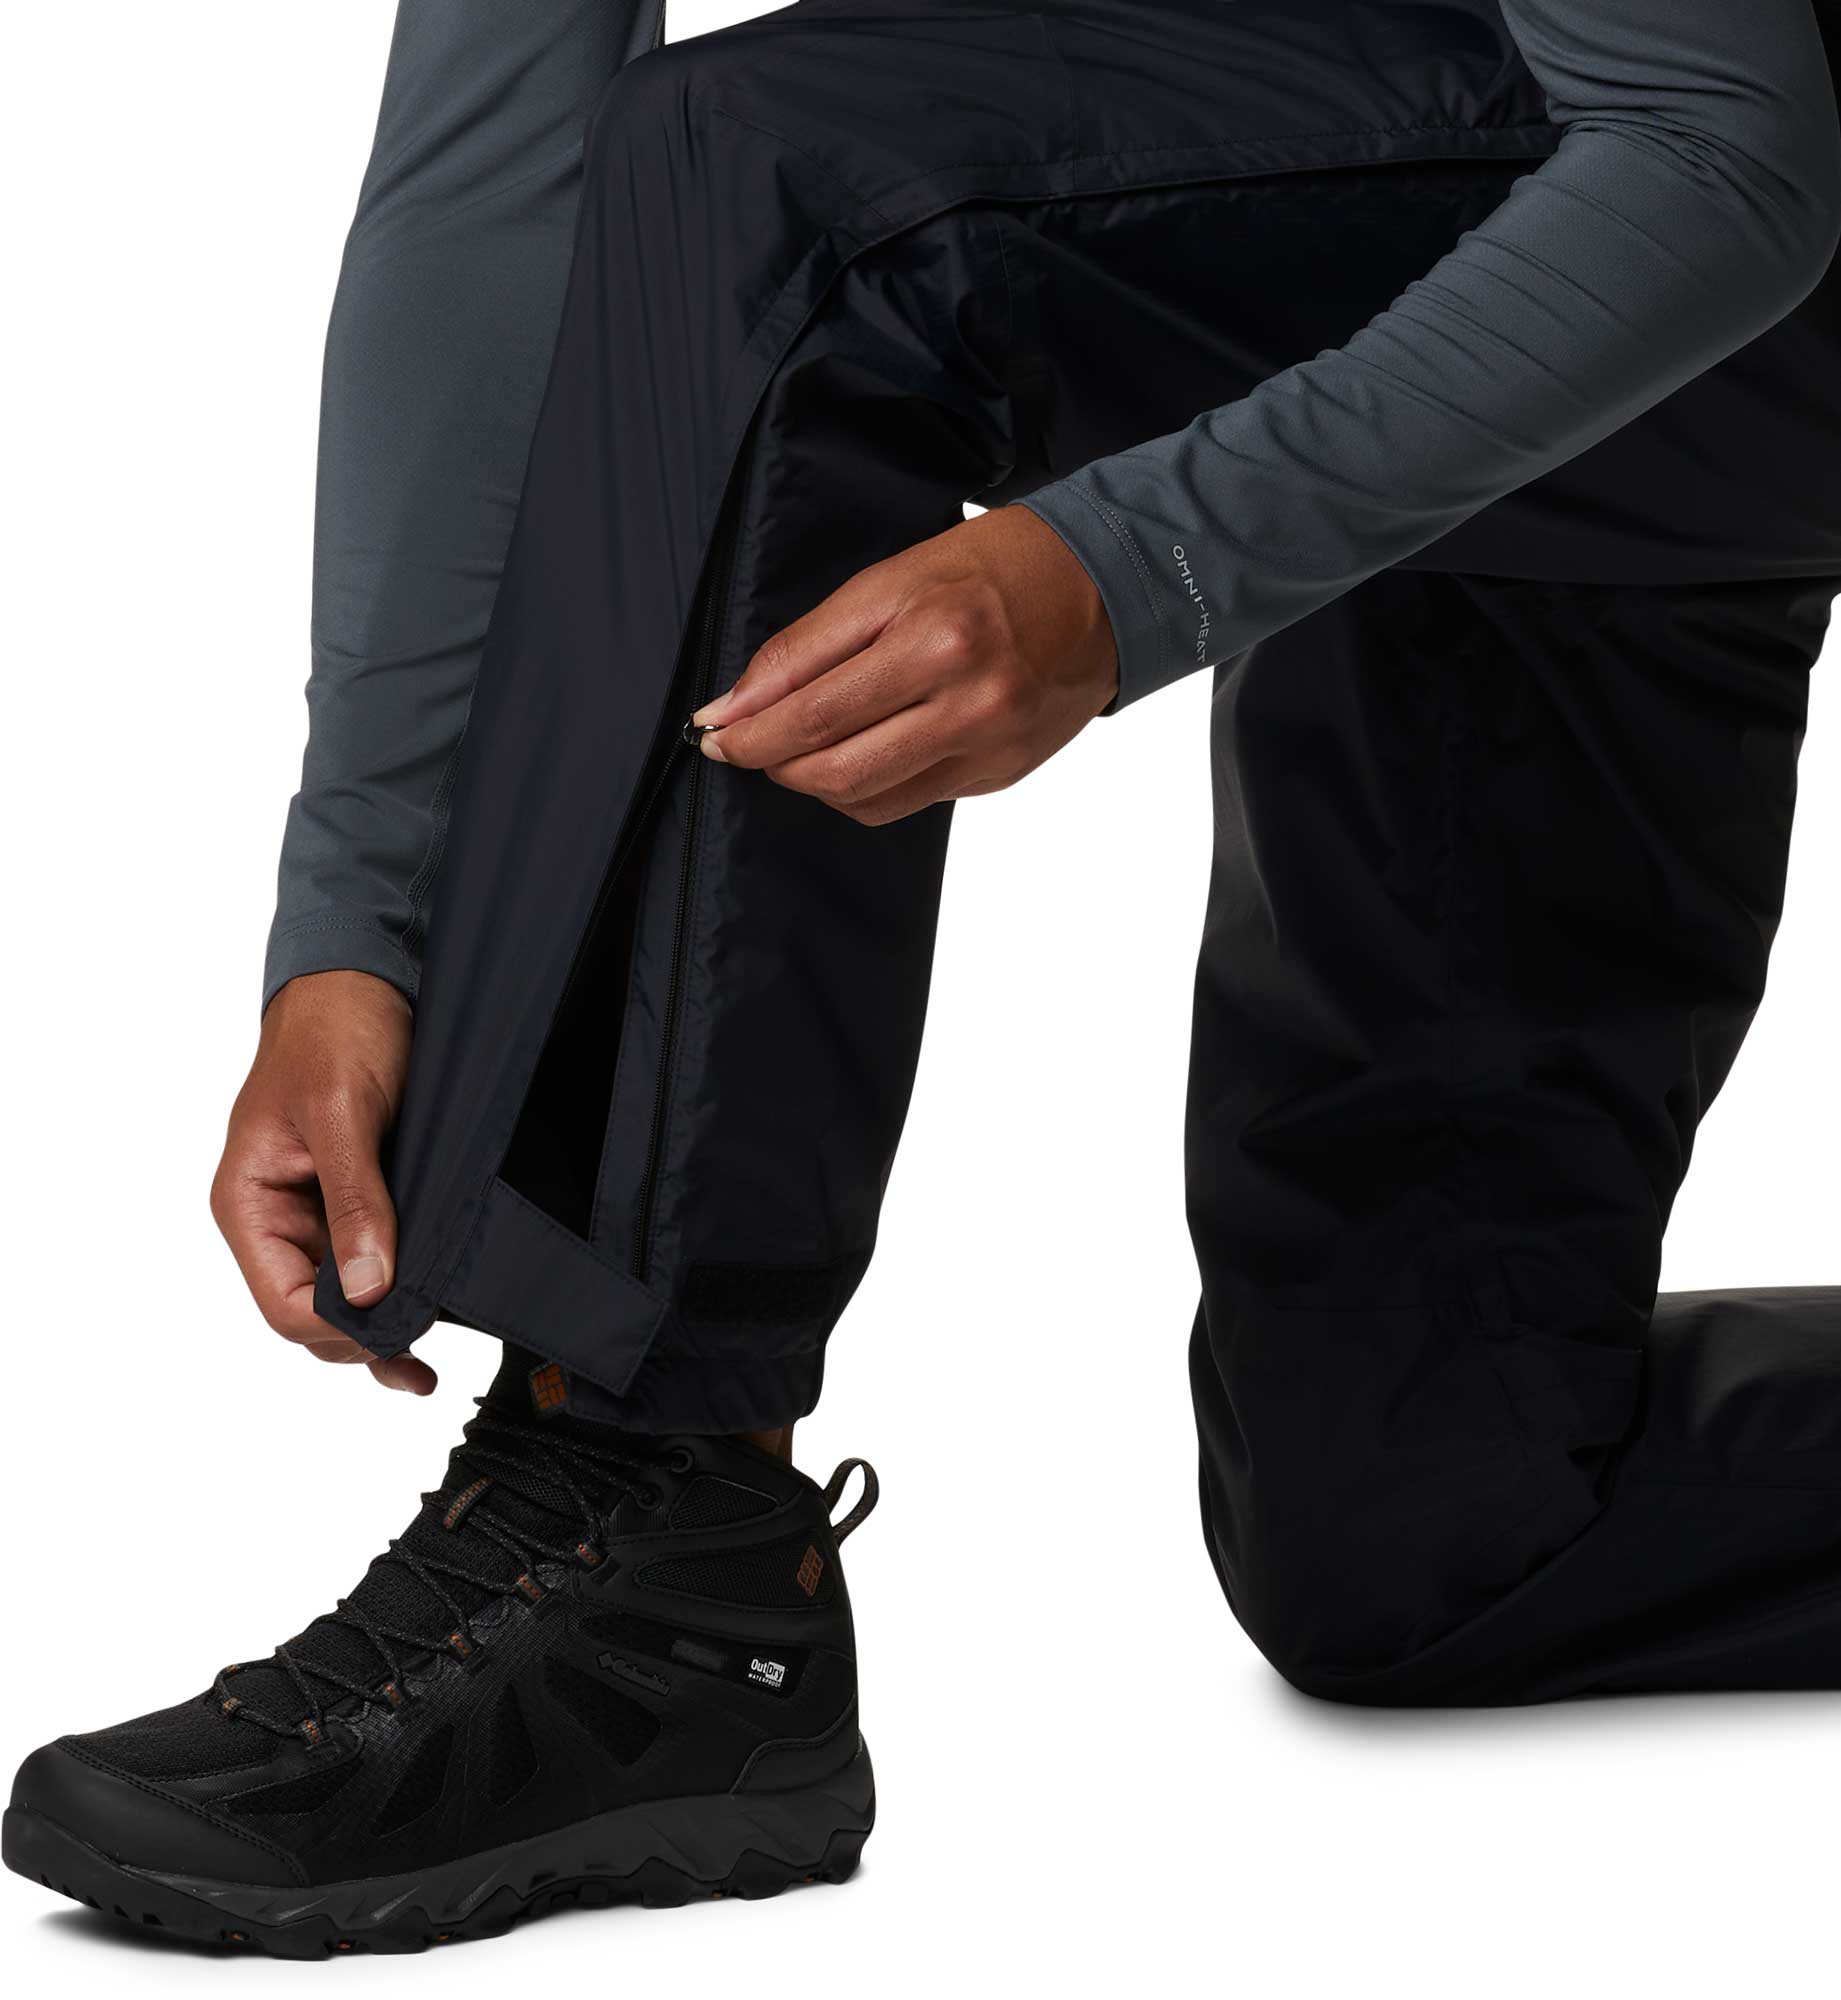 Men’s water resistant trousers